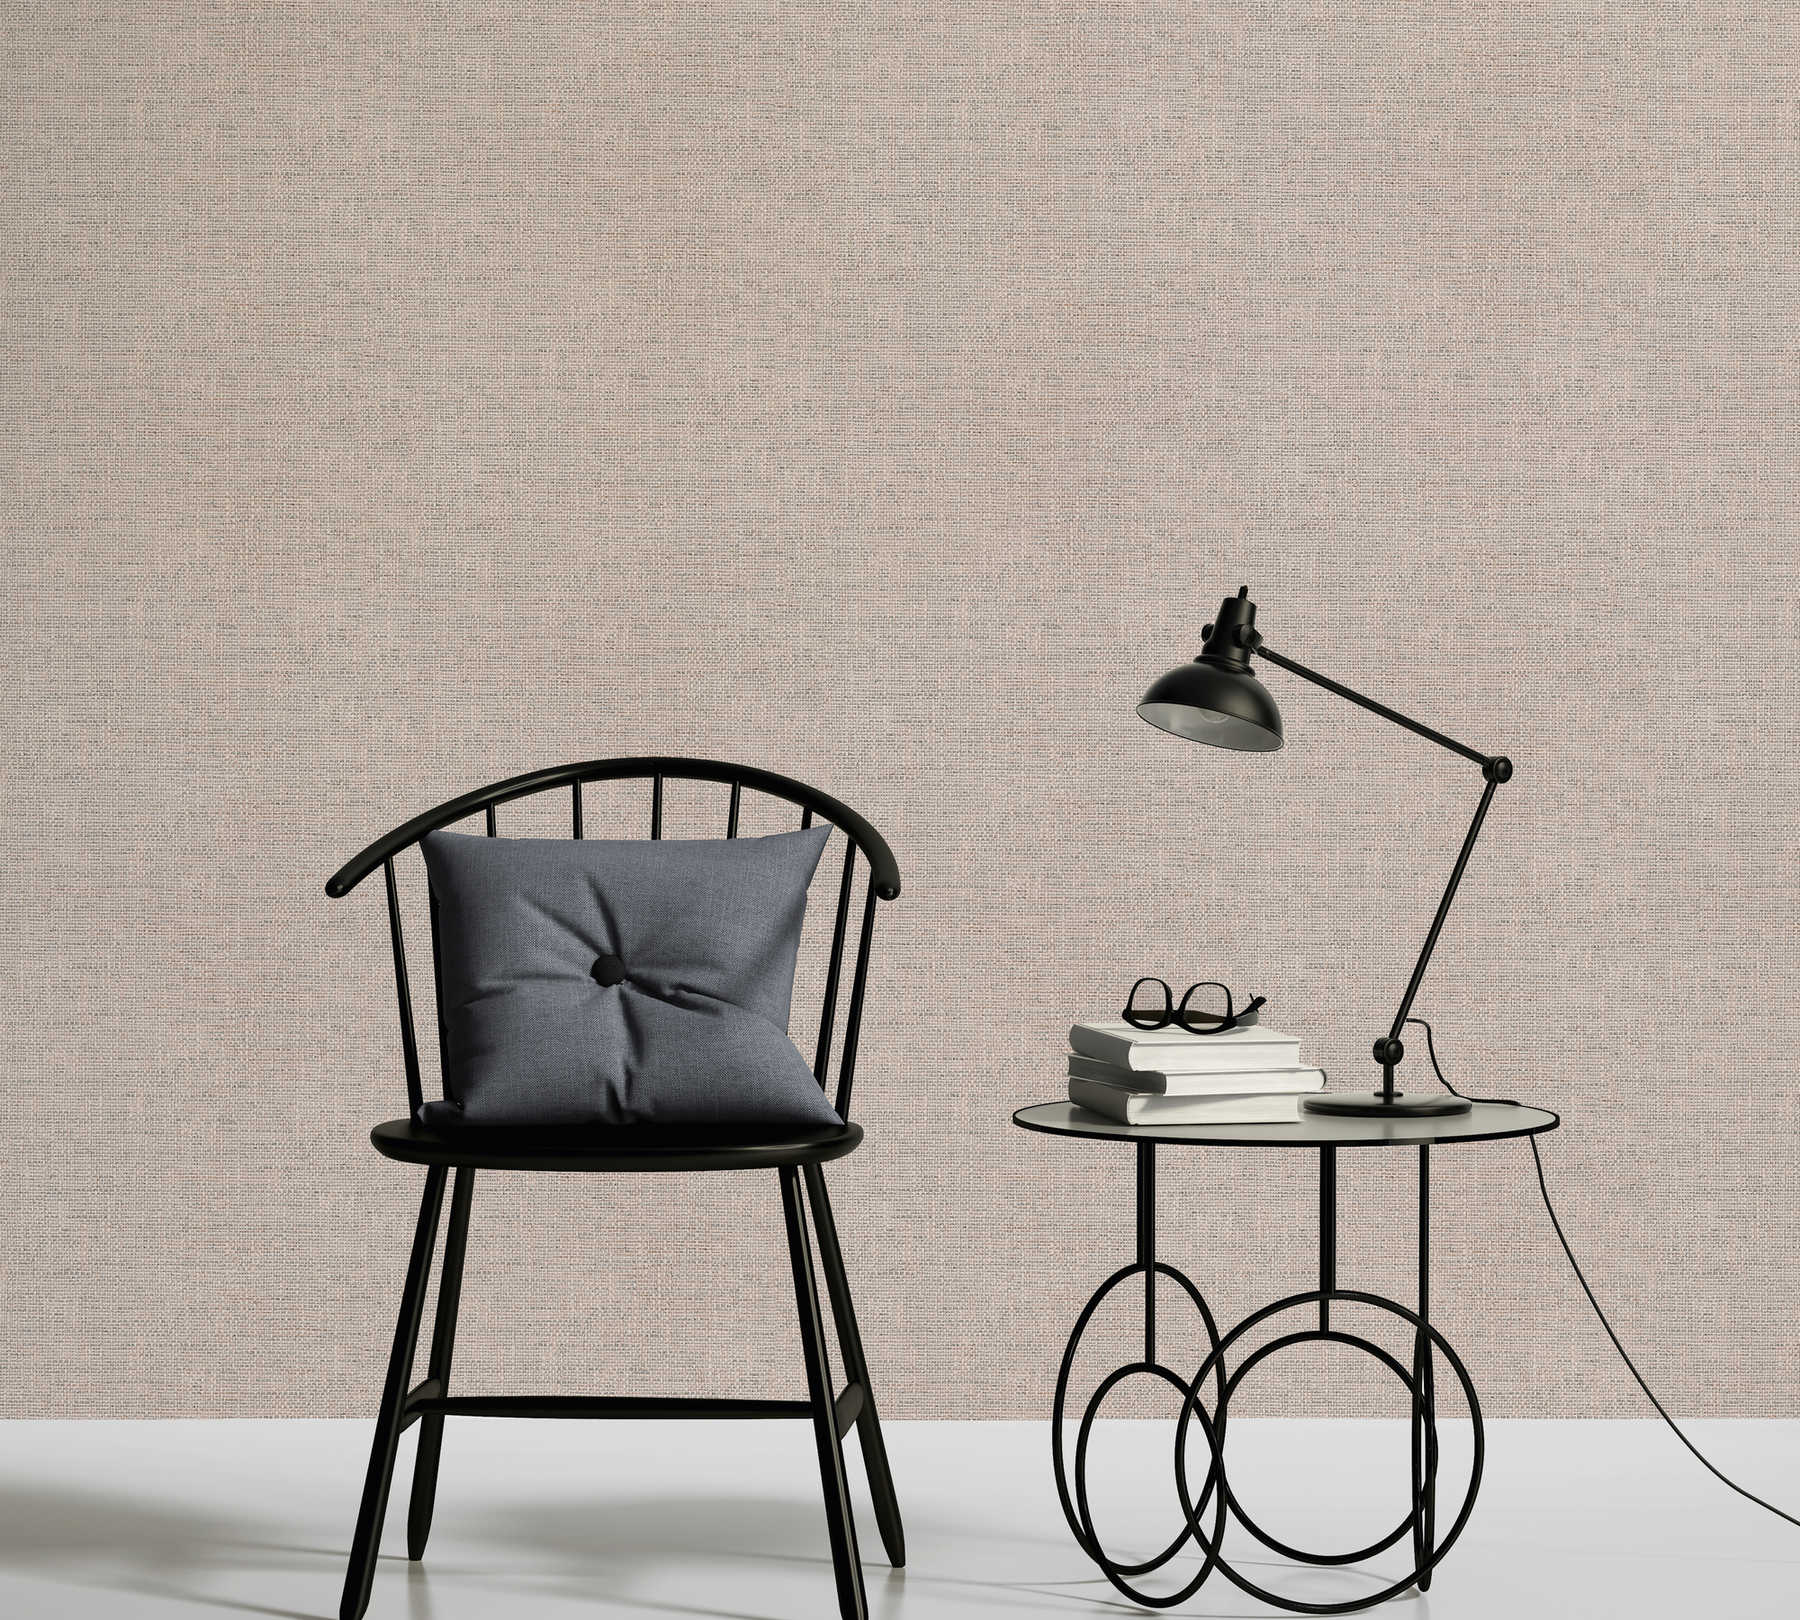             Linen look wallpaper coarse burlap - Brown, White
        